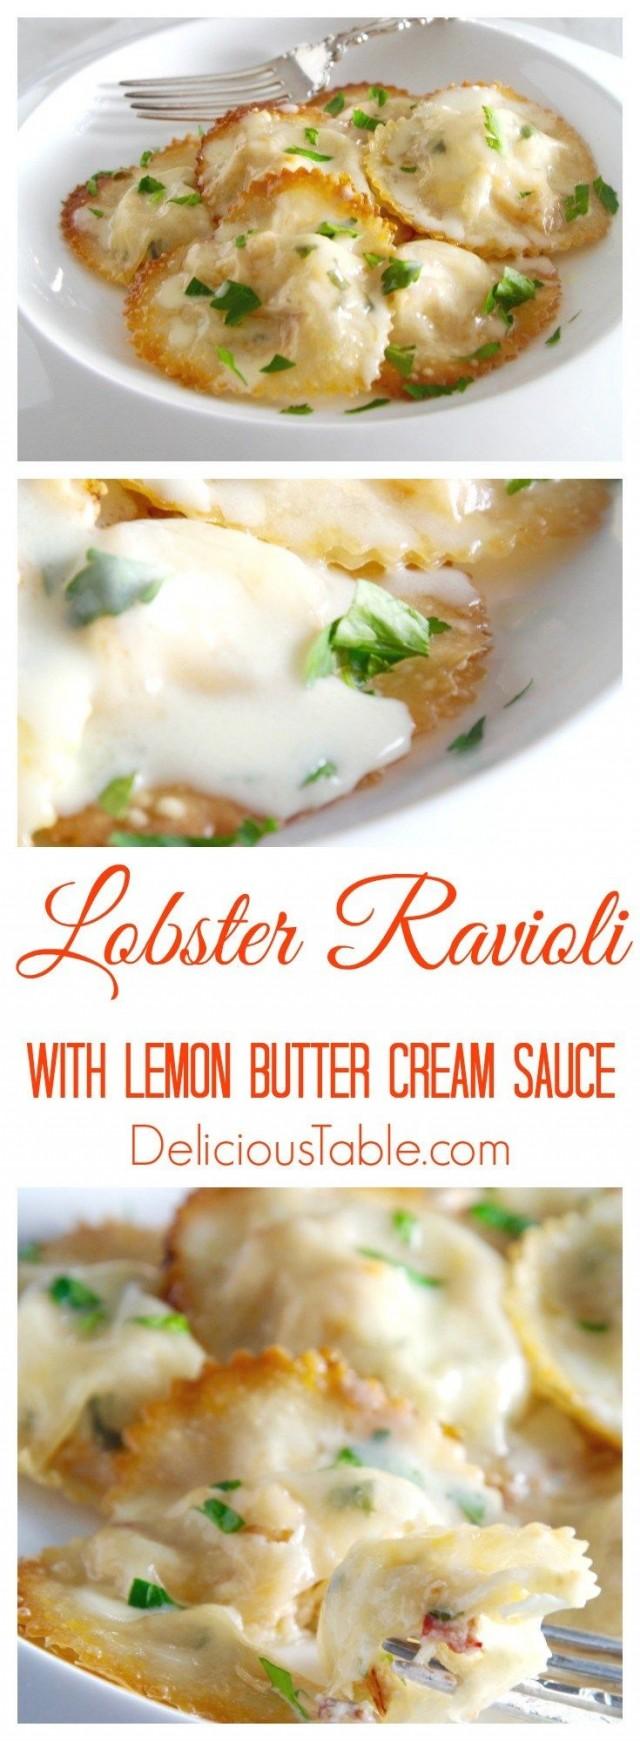 Baked Lobster Ravioli - Lemon Butter Cream Sauce #2765867 - Weddbook